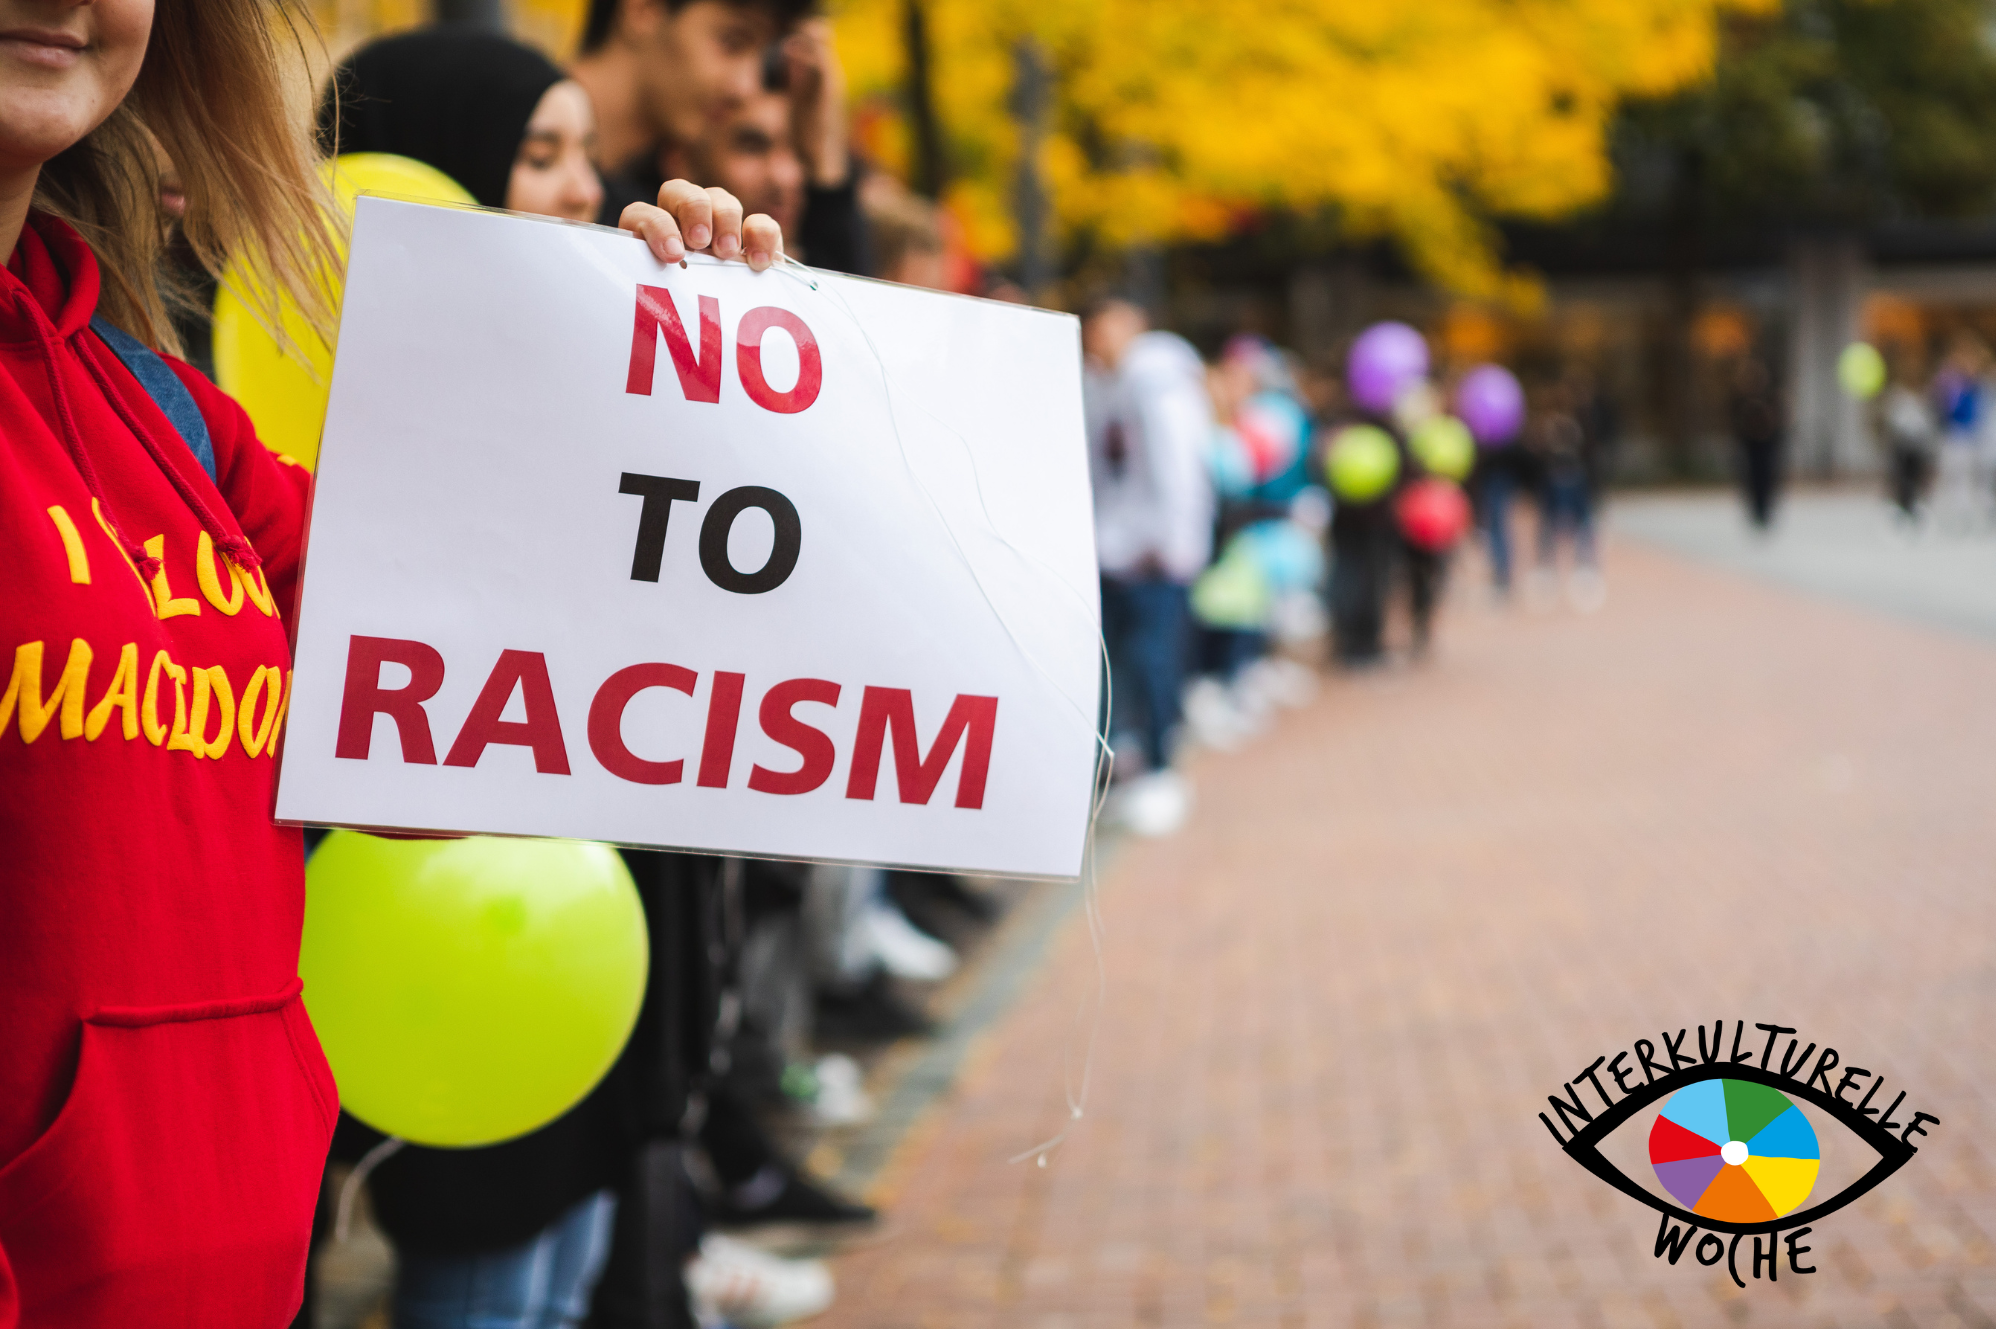 IKW-Motiv No to racism